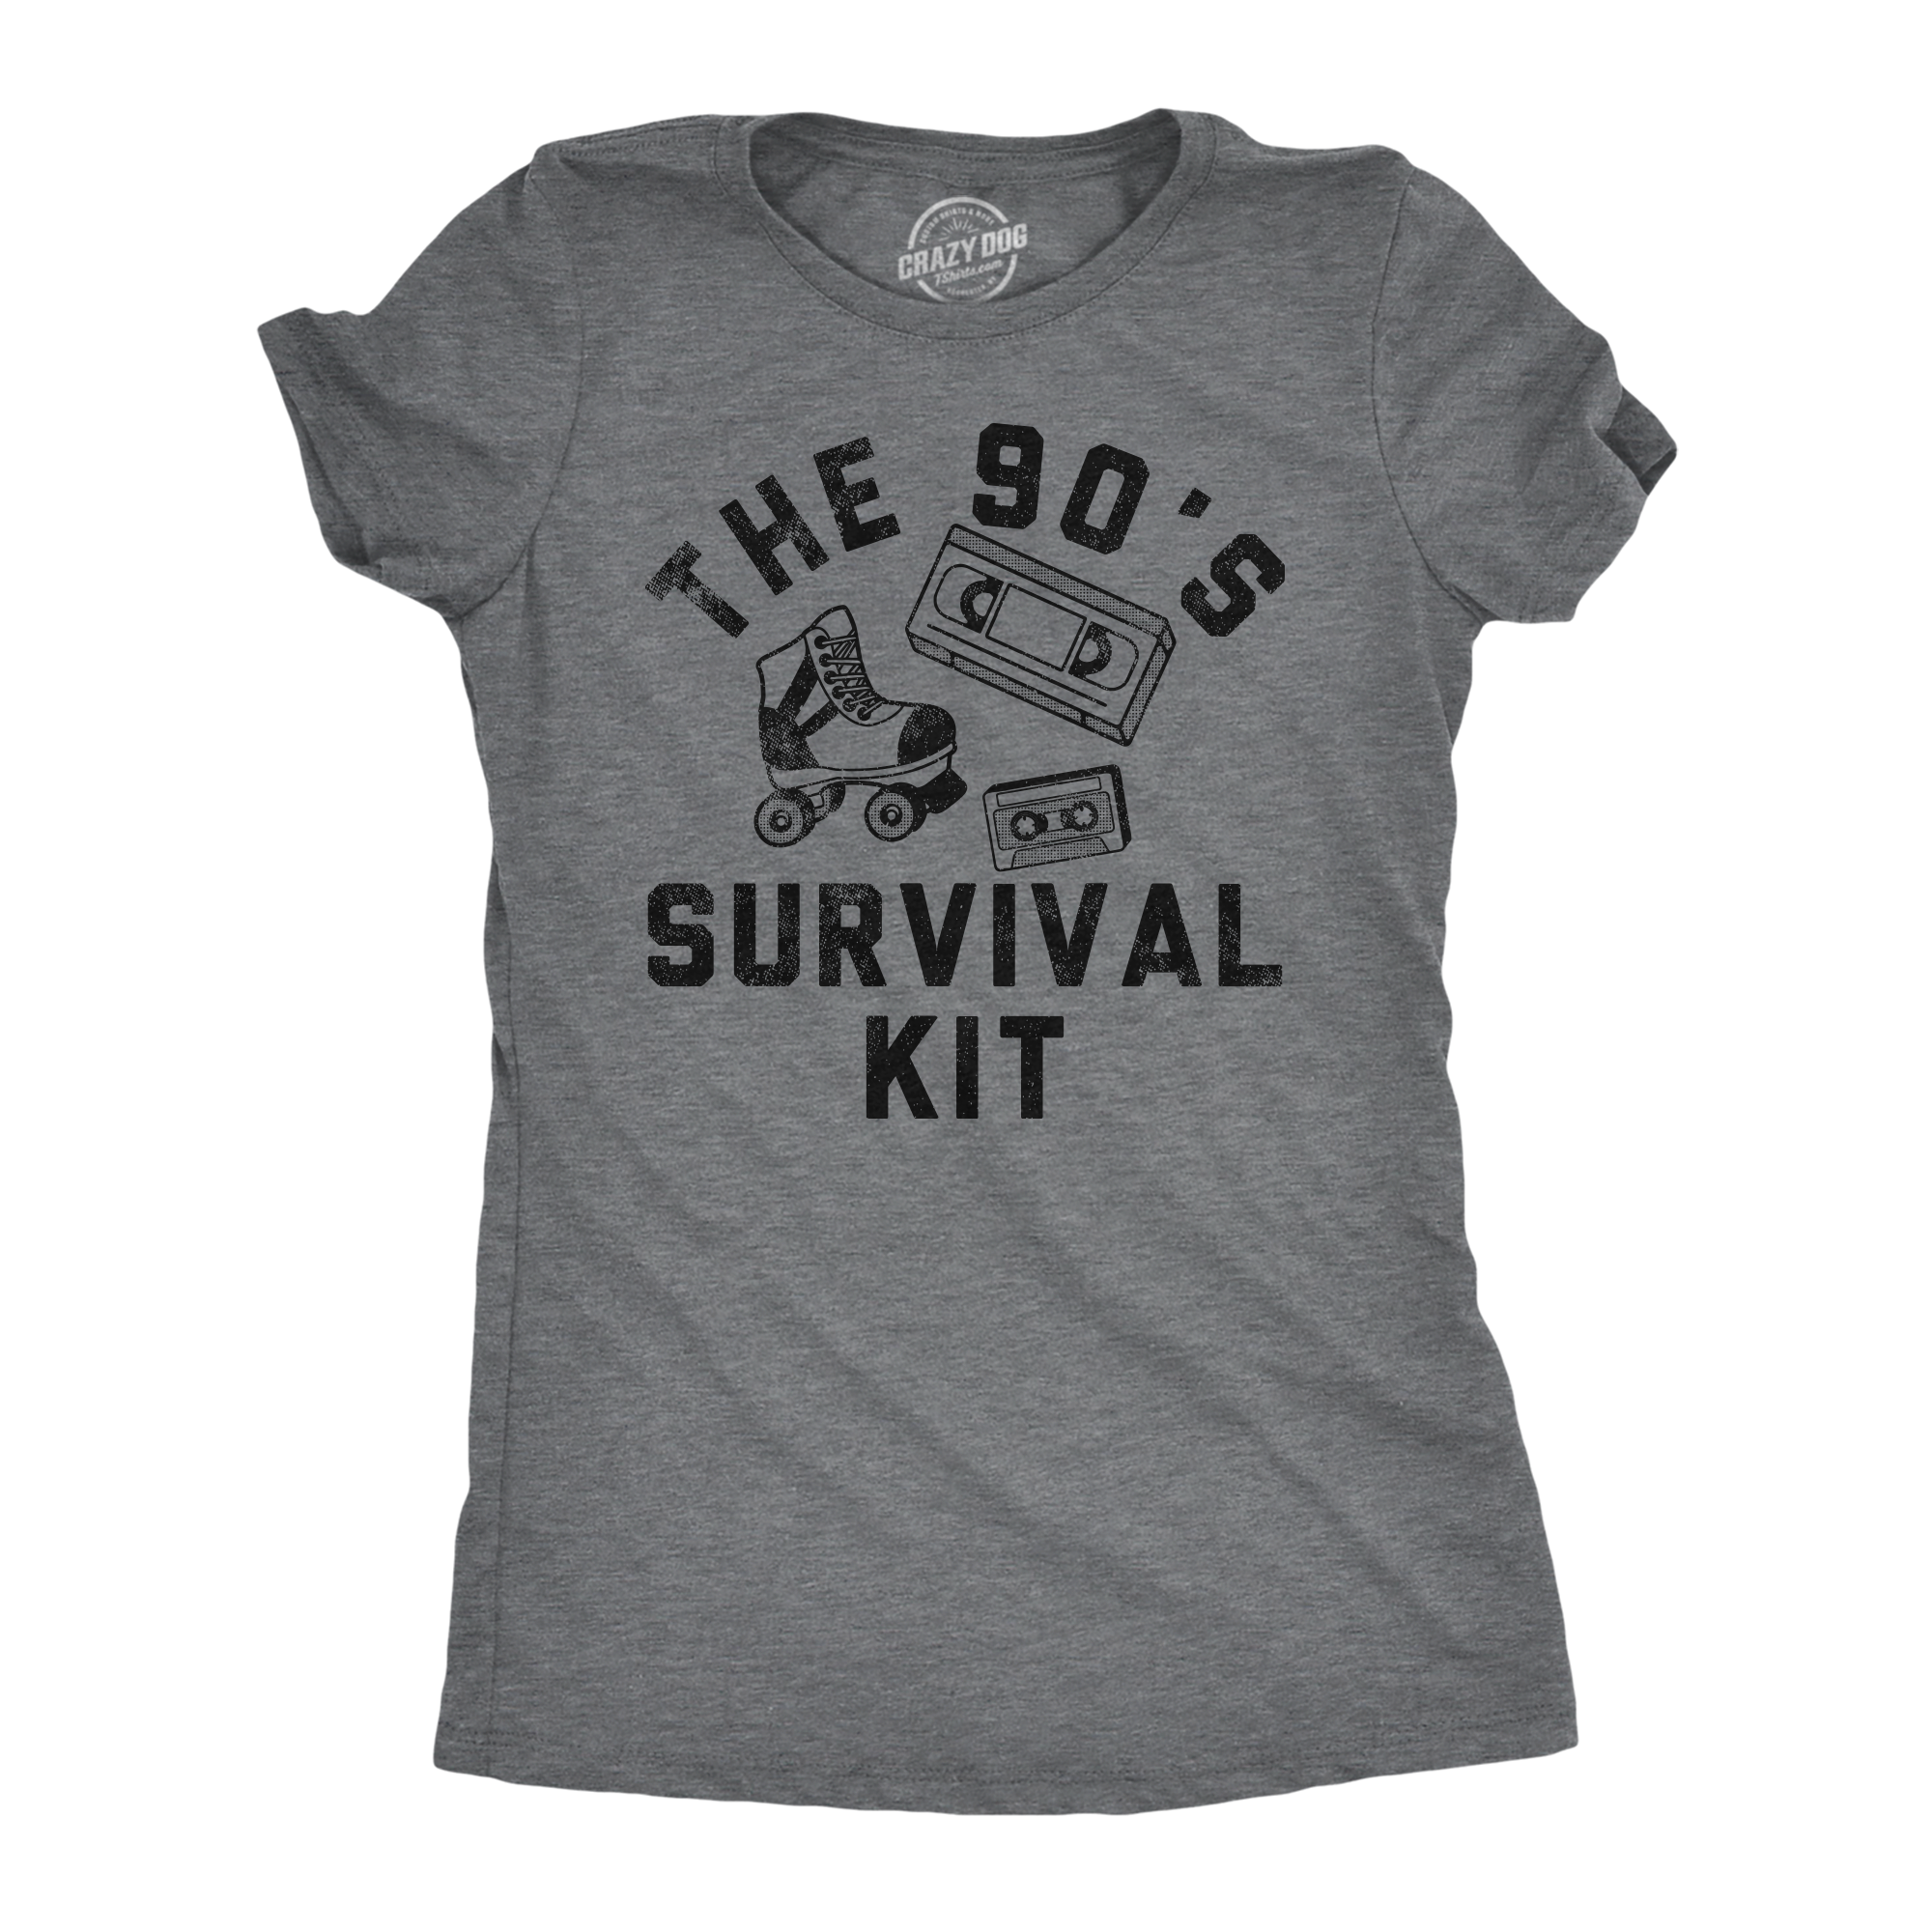 Funny Dark Heather Grey - 90s Survival Kit The 90s Survival Kit Womens T Shirt Nerdy Retro sarcastic Tee